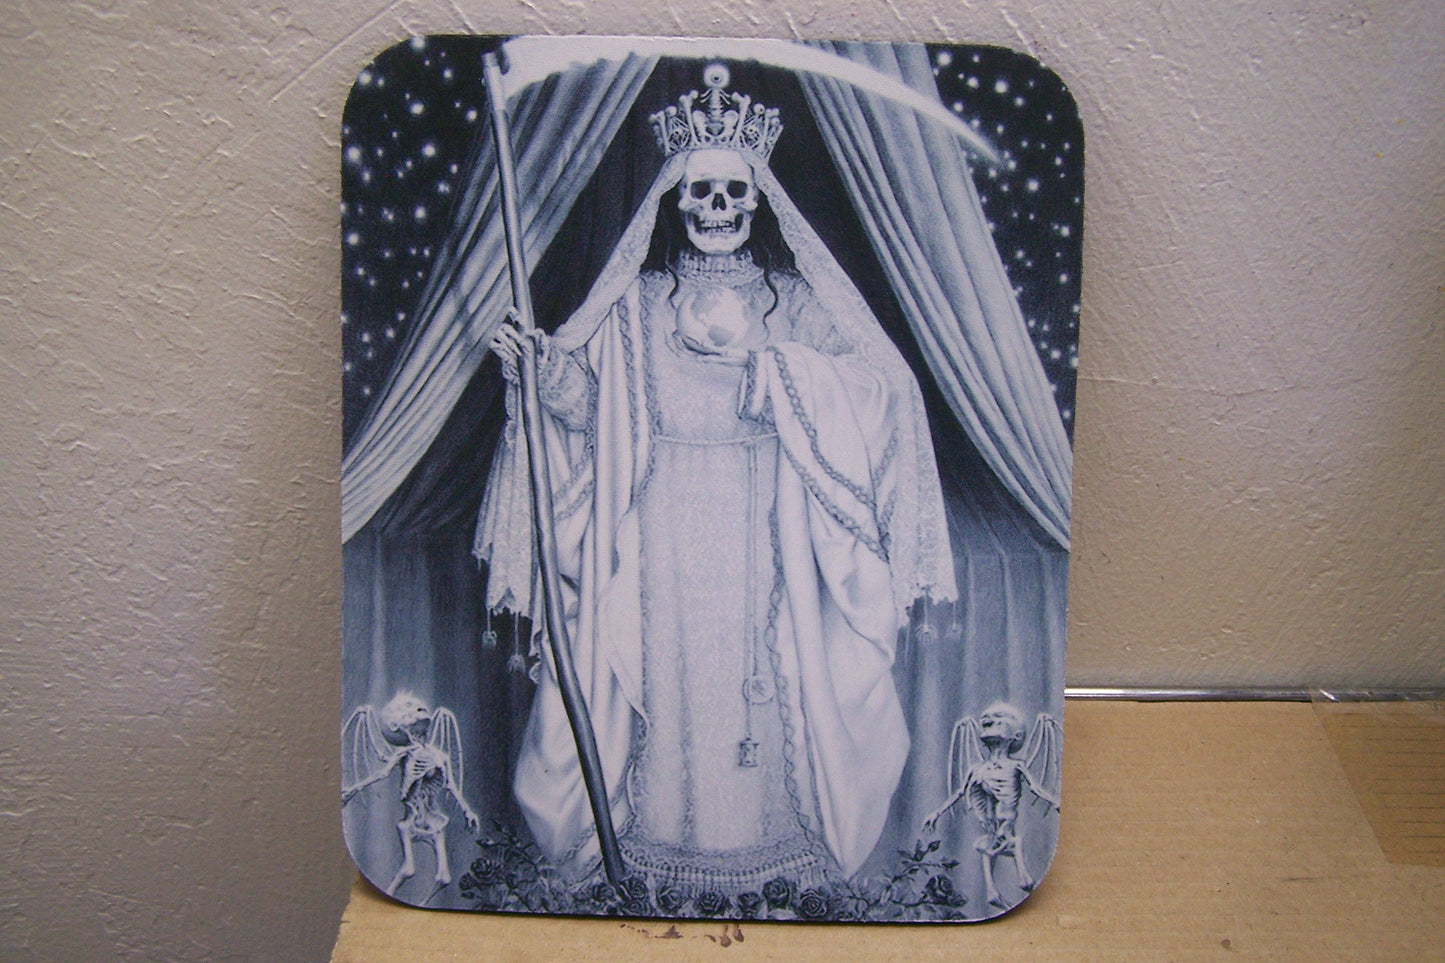 Mousepad - Santa Muerte, Mexican Holy Death, Female Grim Reaper